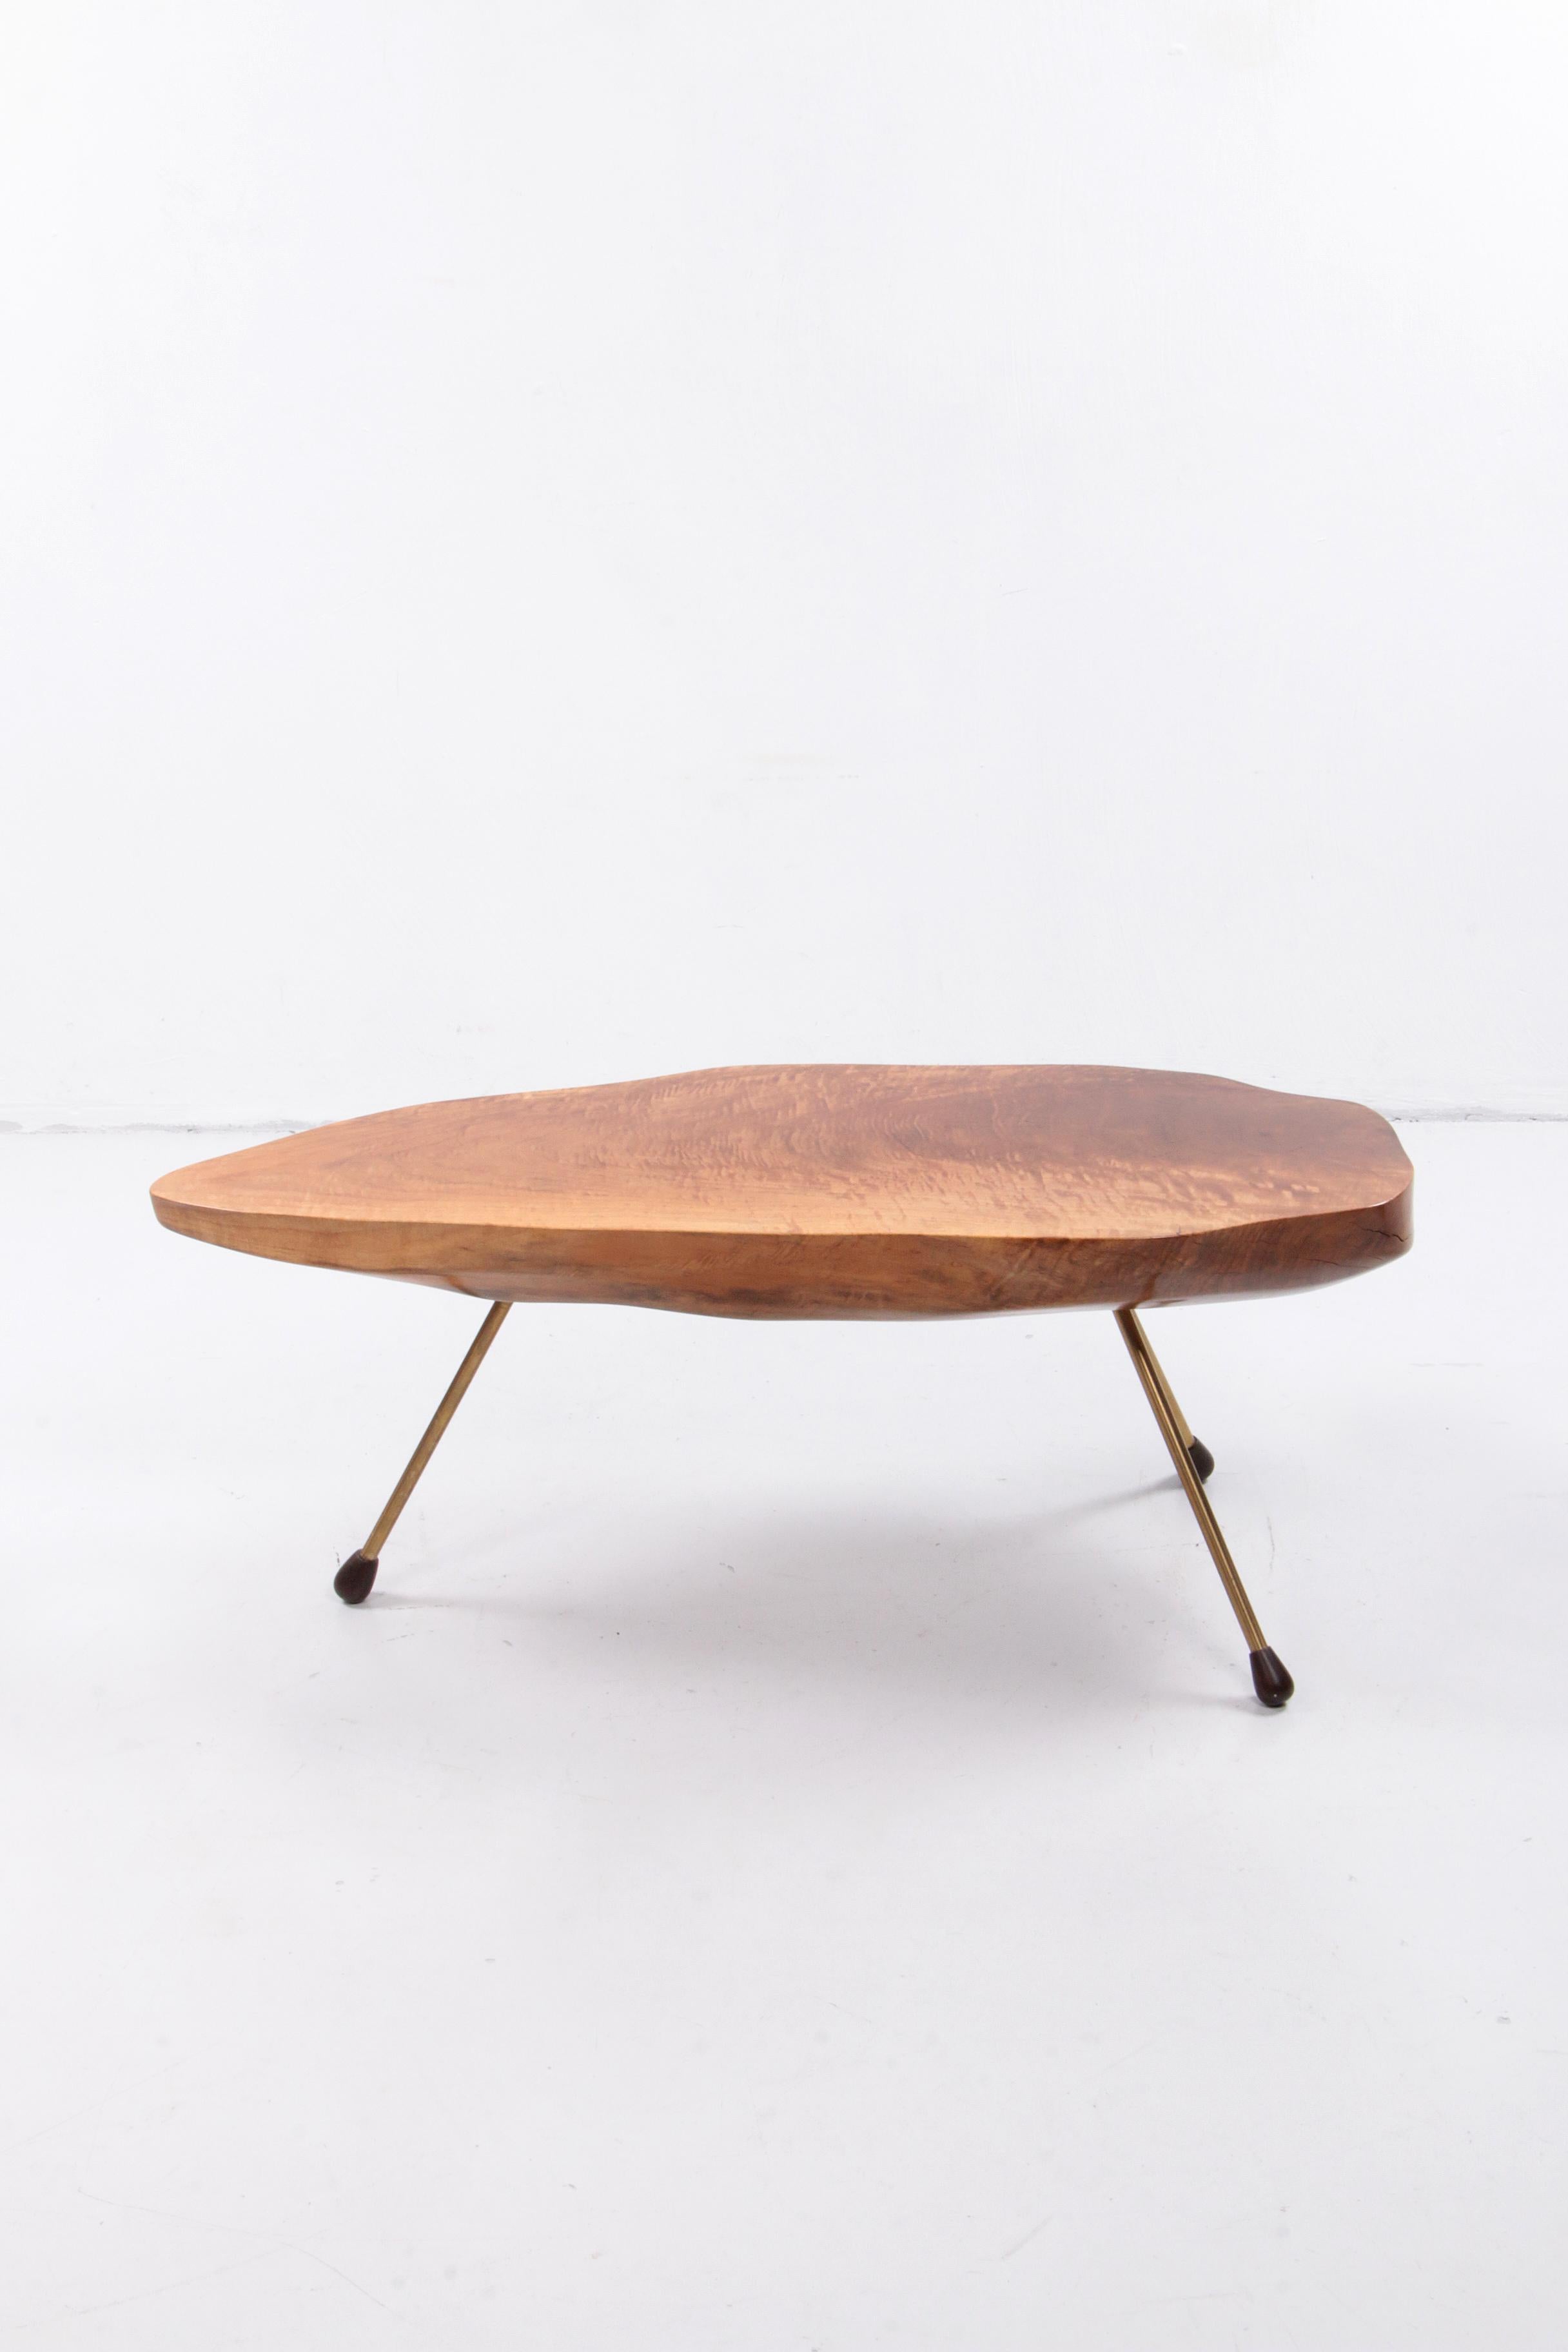 Austrian Design Coffee Table Walnut with Copper Legs, 1950s Austria